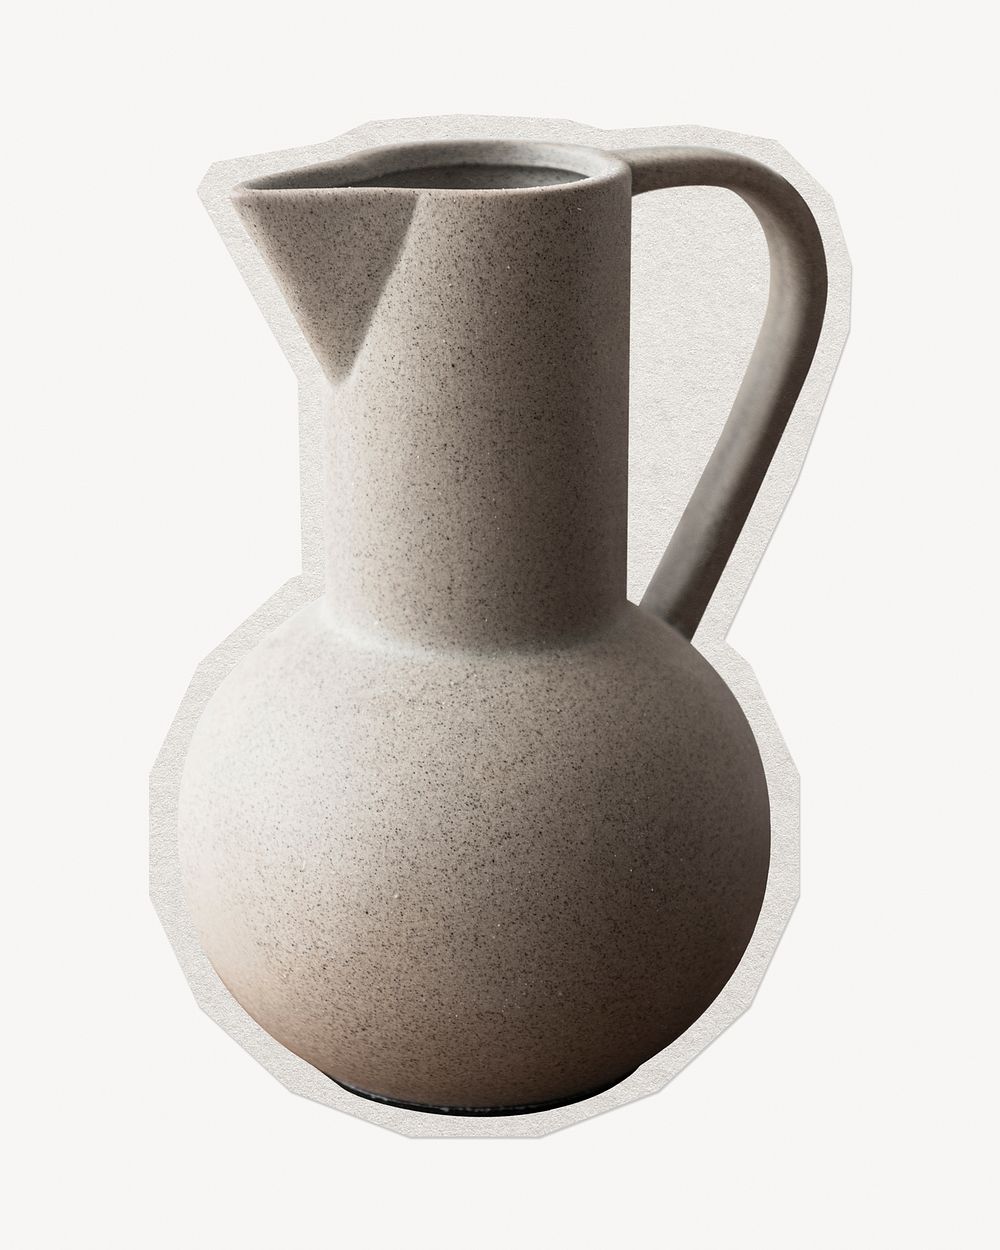 Beige ceramic jug paper element with white border